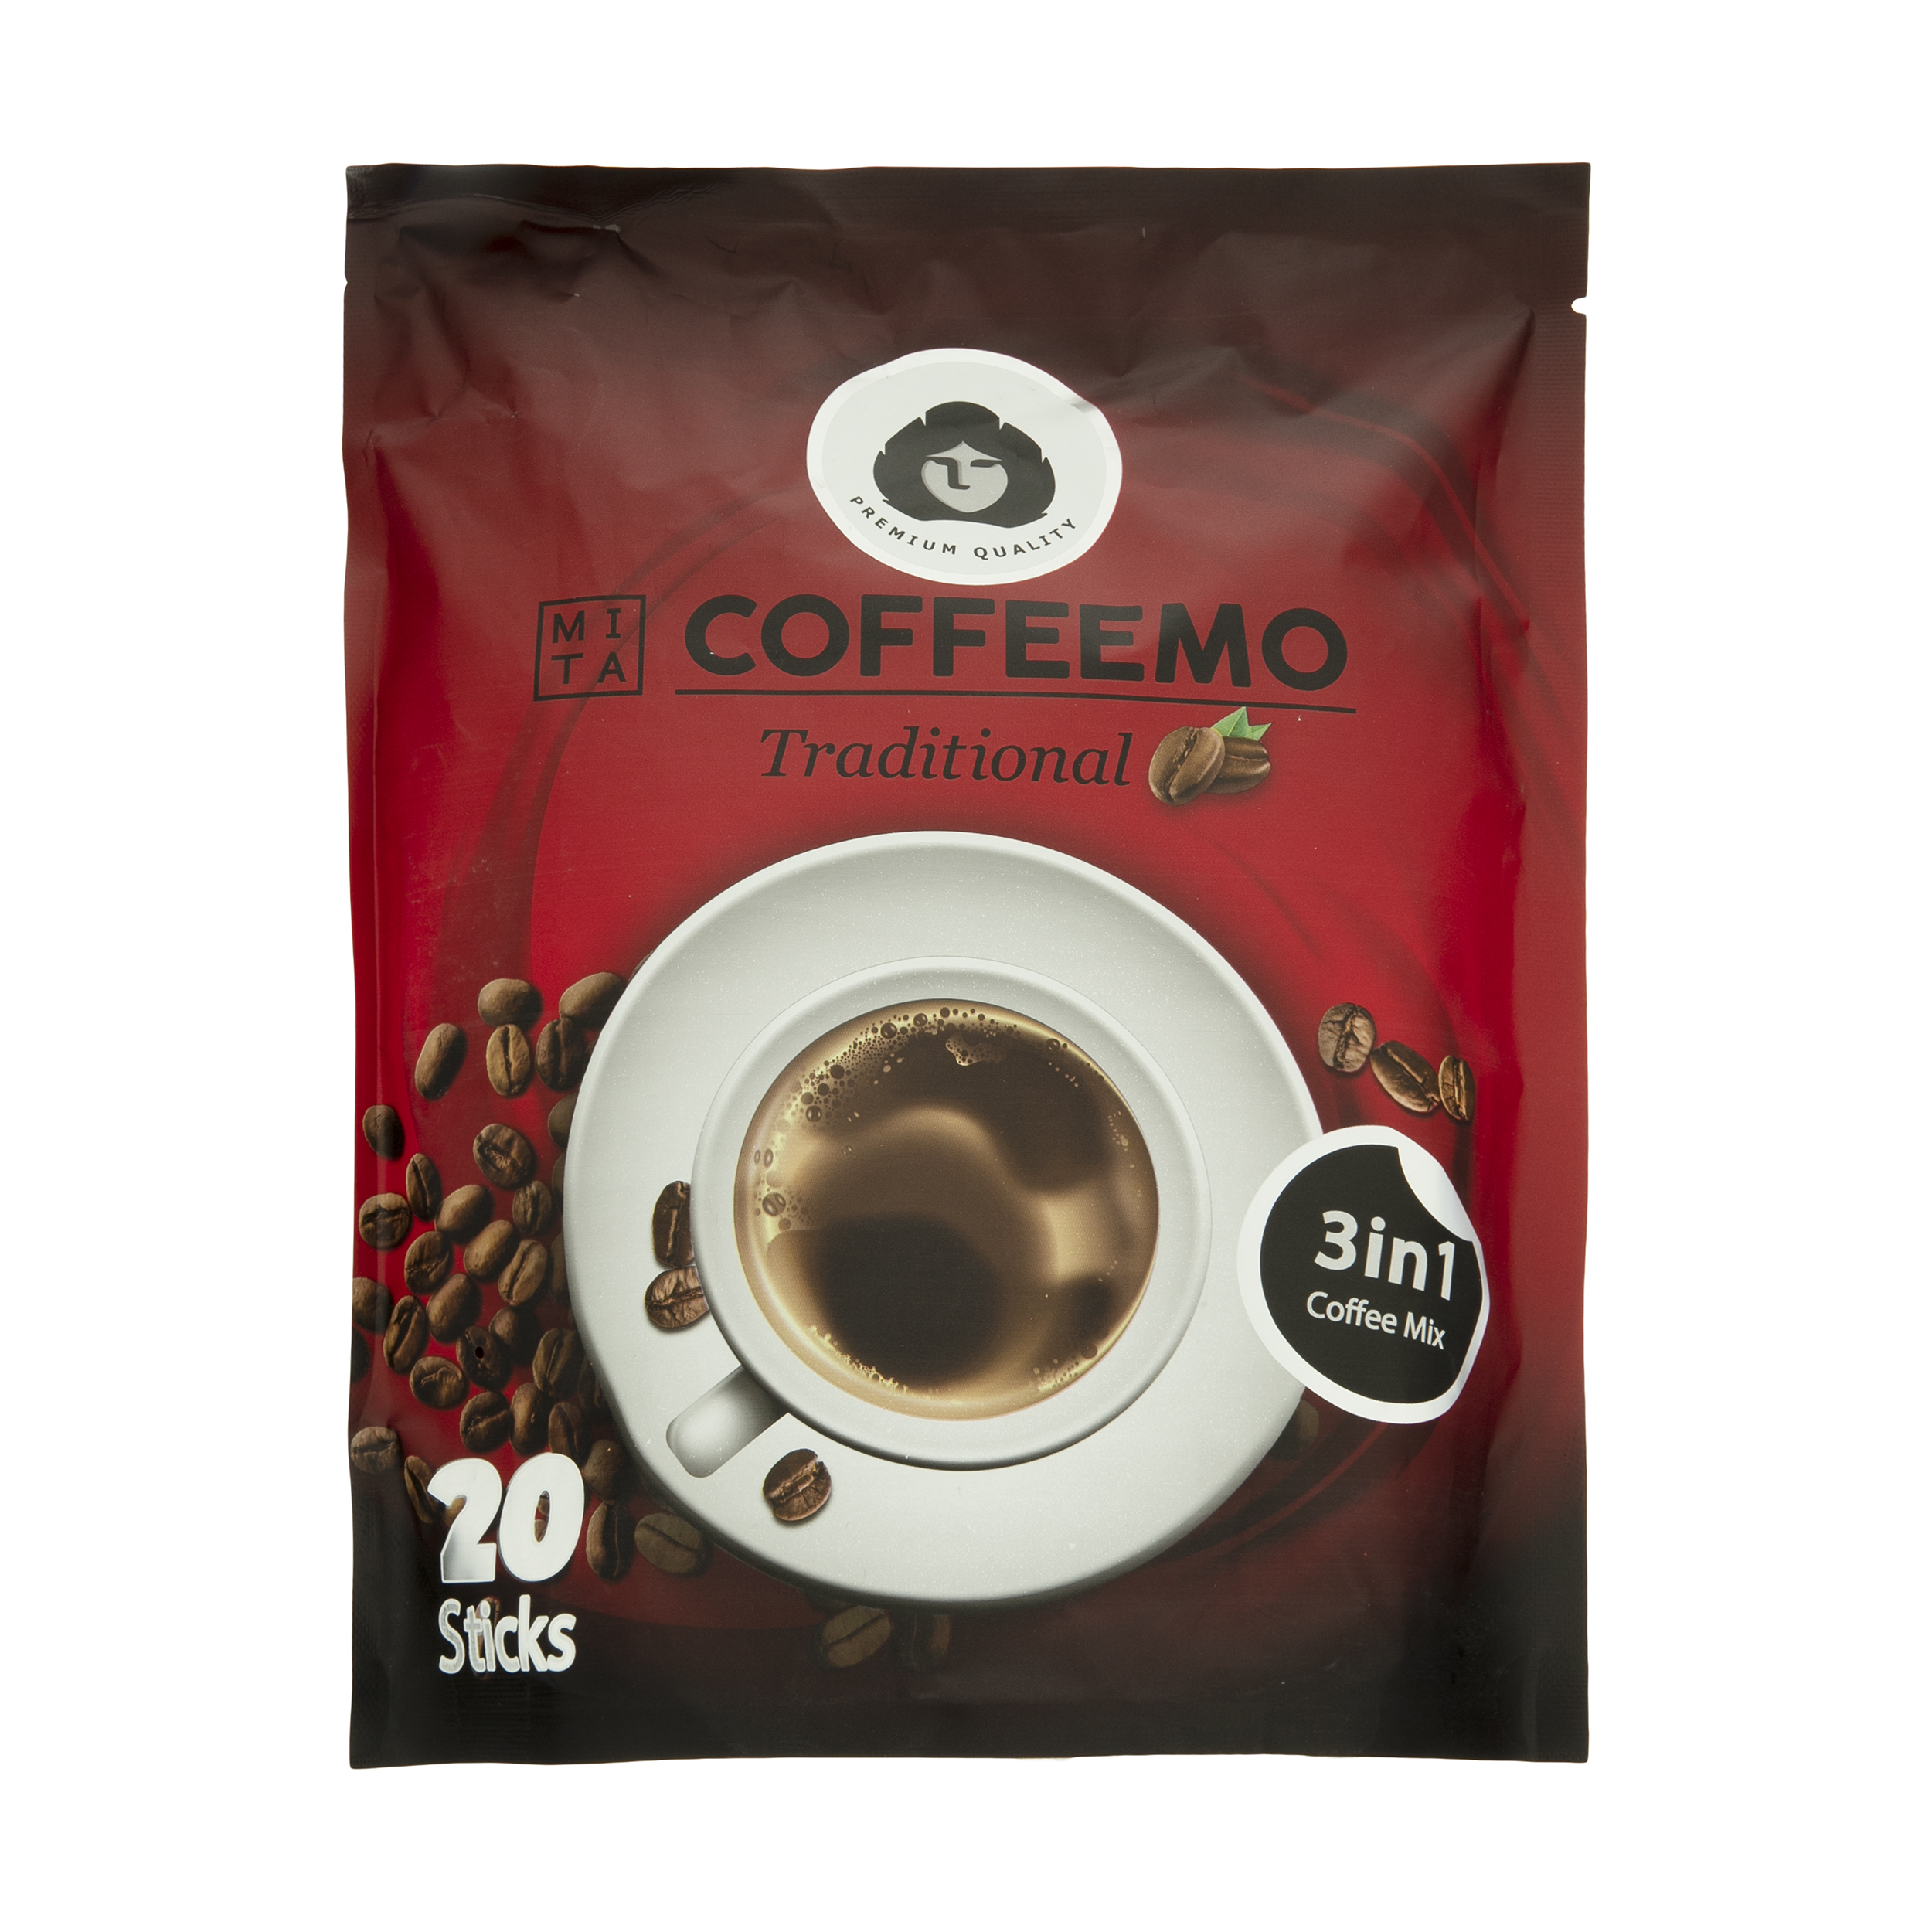 پودر قهوه فوری 1 × 3 تردیشینال کافیمو  - 20 ساشه 18 گرمی